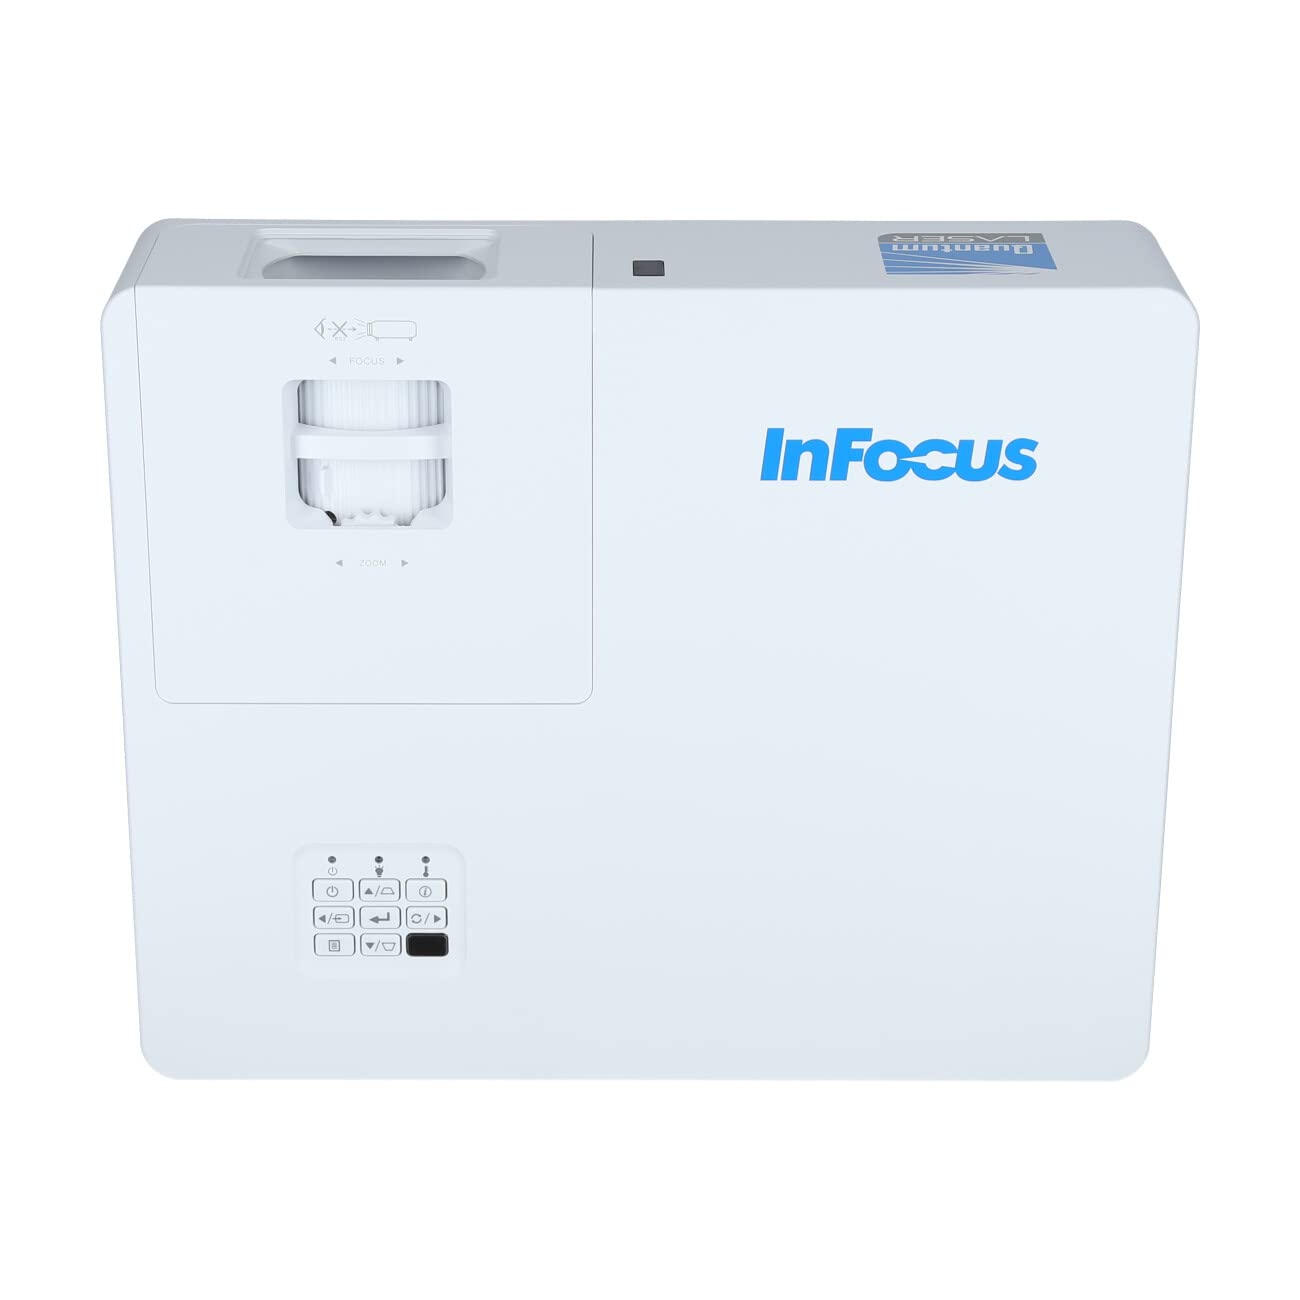 InFocus Advanced INL4128 3D Ready DLP Projector - 16:9 - Ceiling Mountable